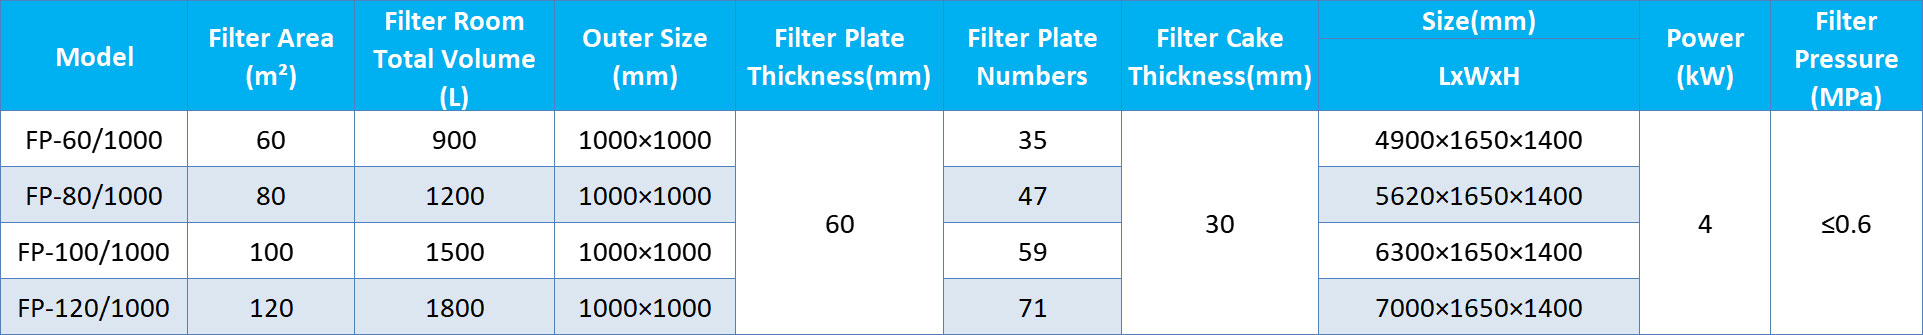 High Pressure Filter Press Parameters